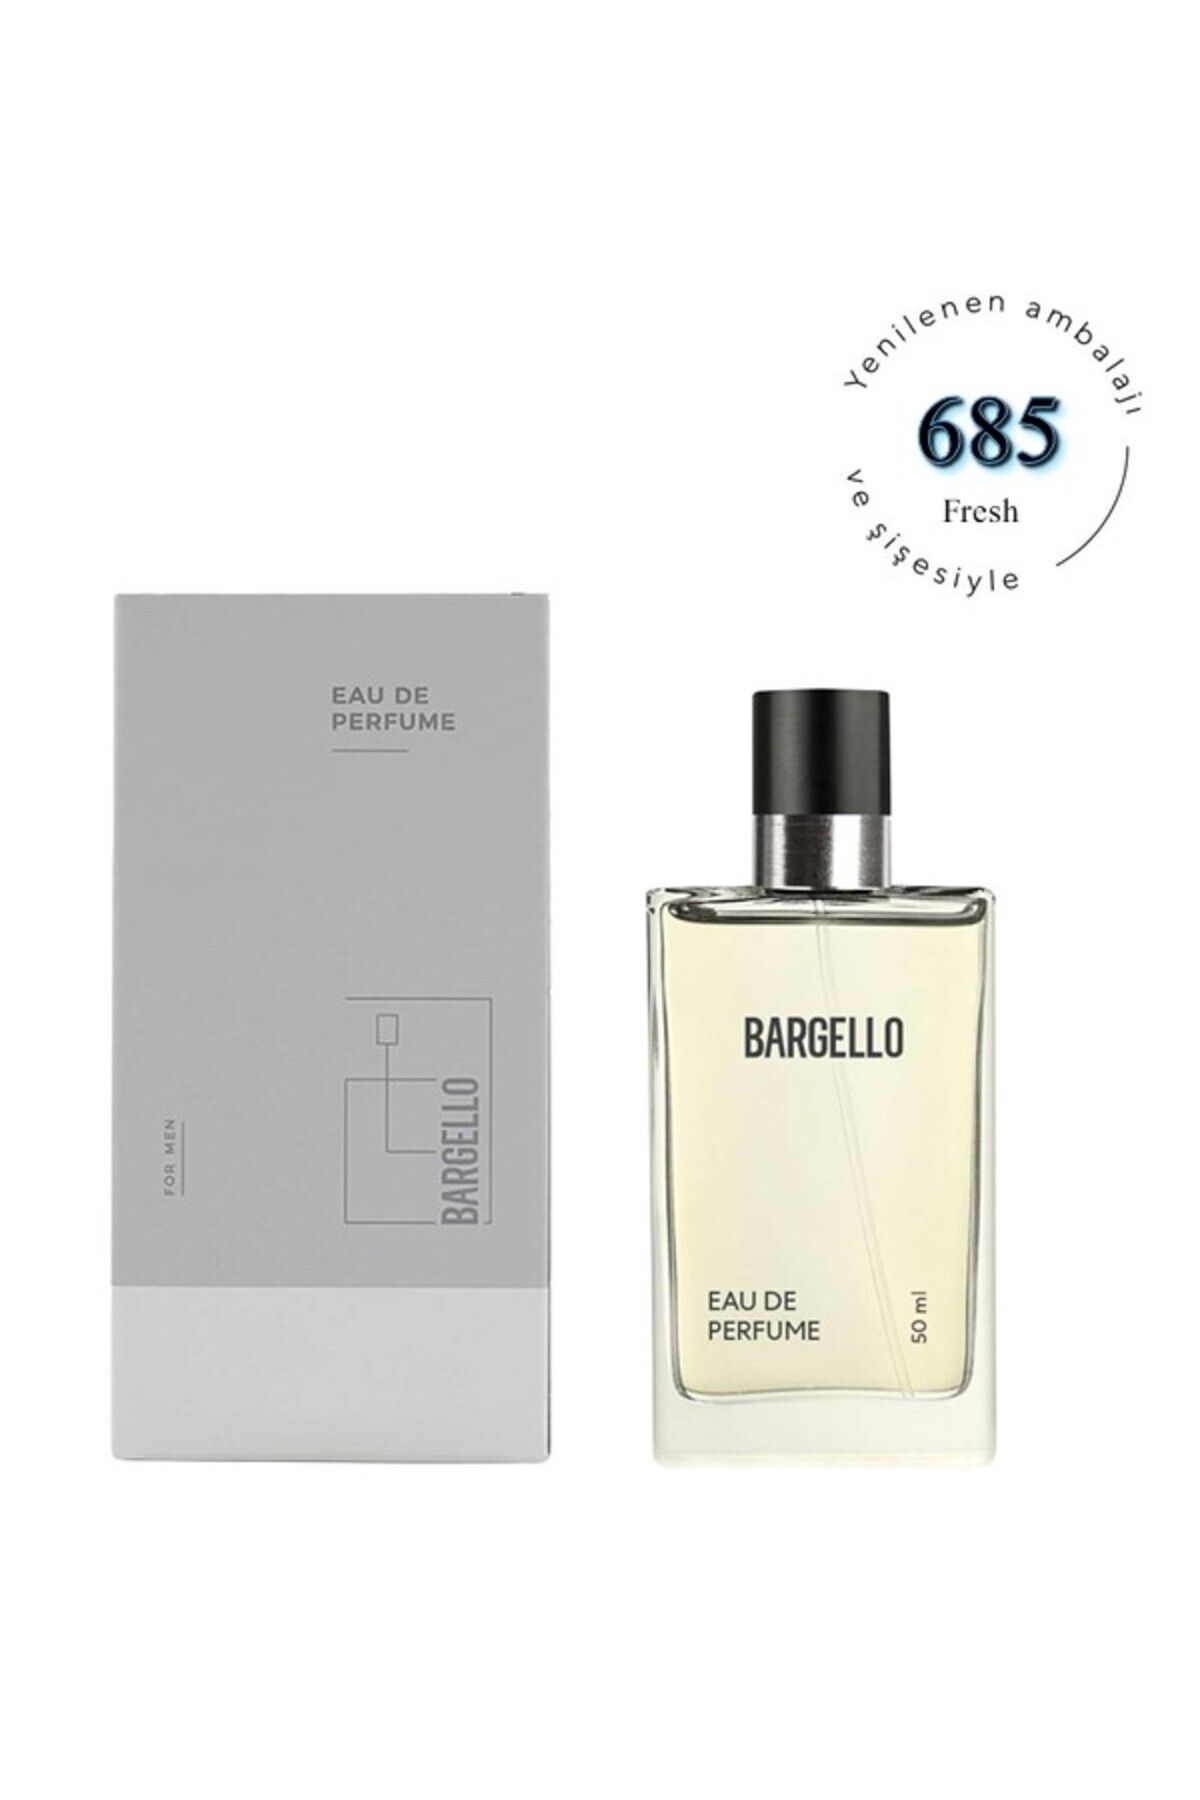 Bargello 685 Erkek Parfüm Edp 50  ml Fresh mnms50685